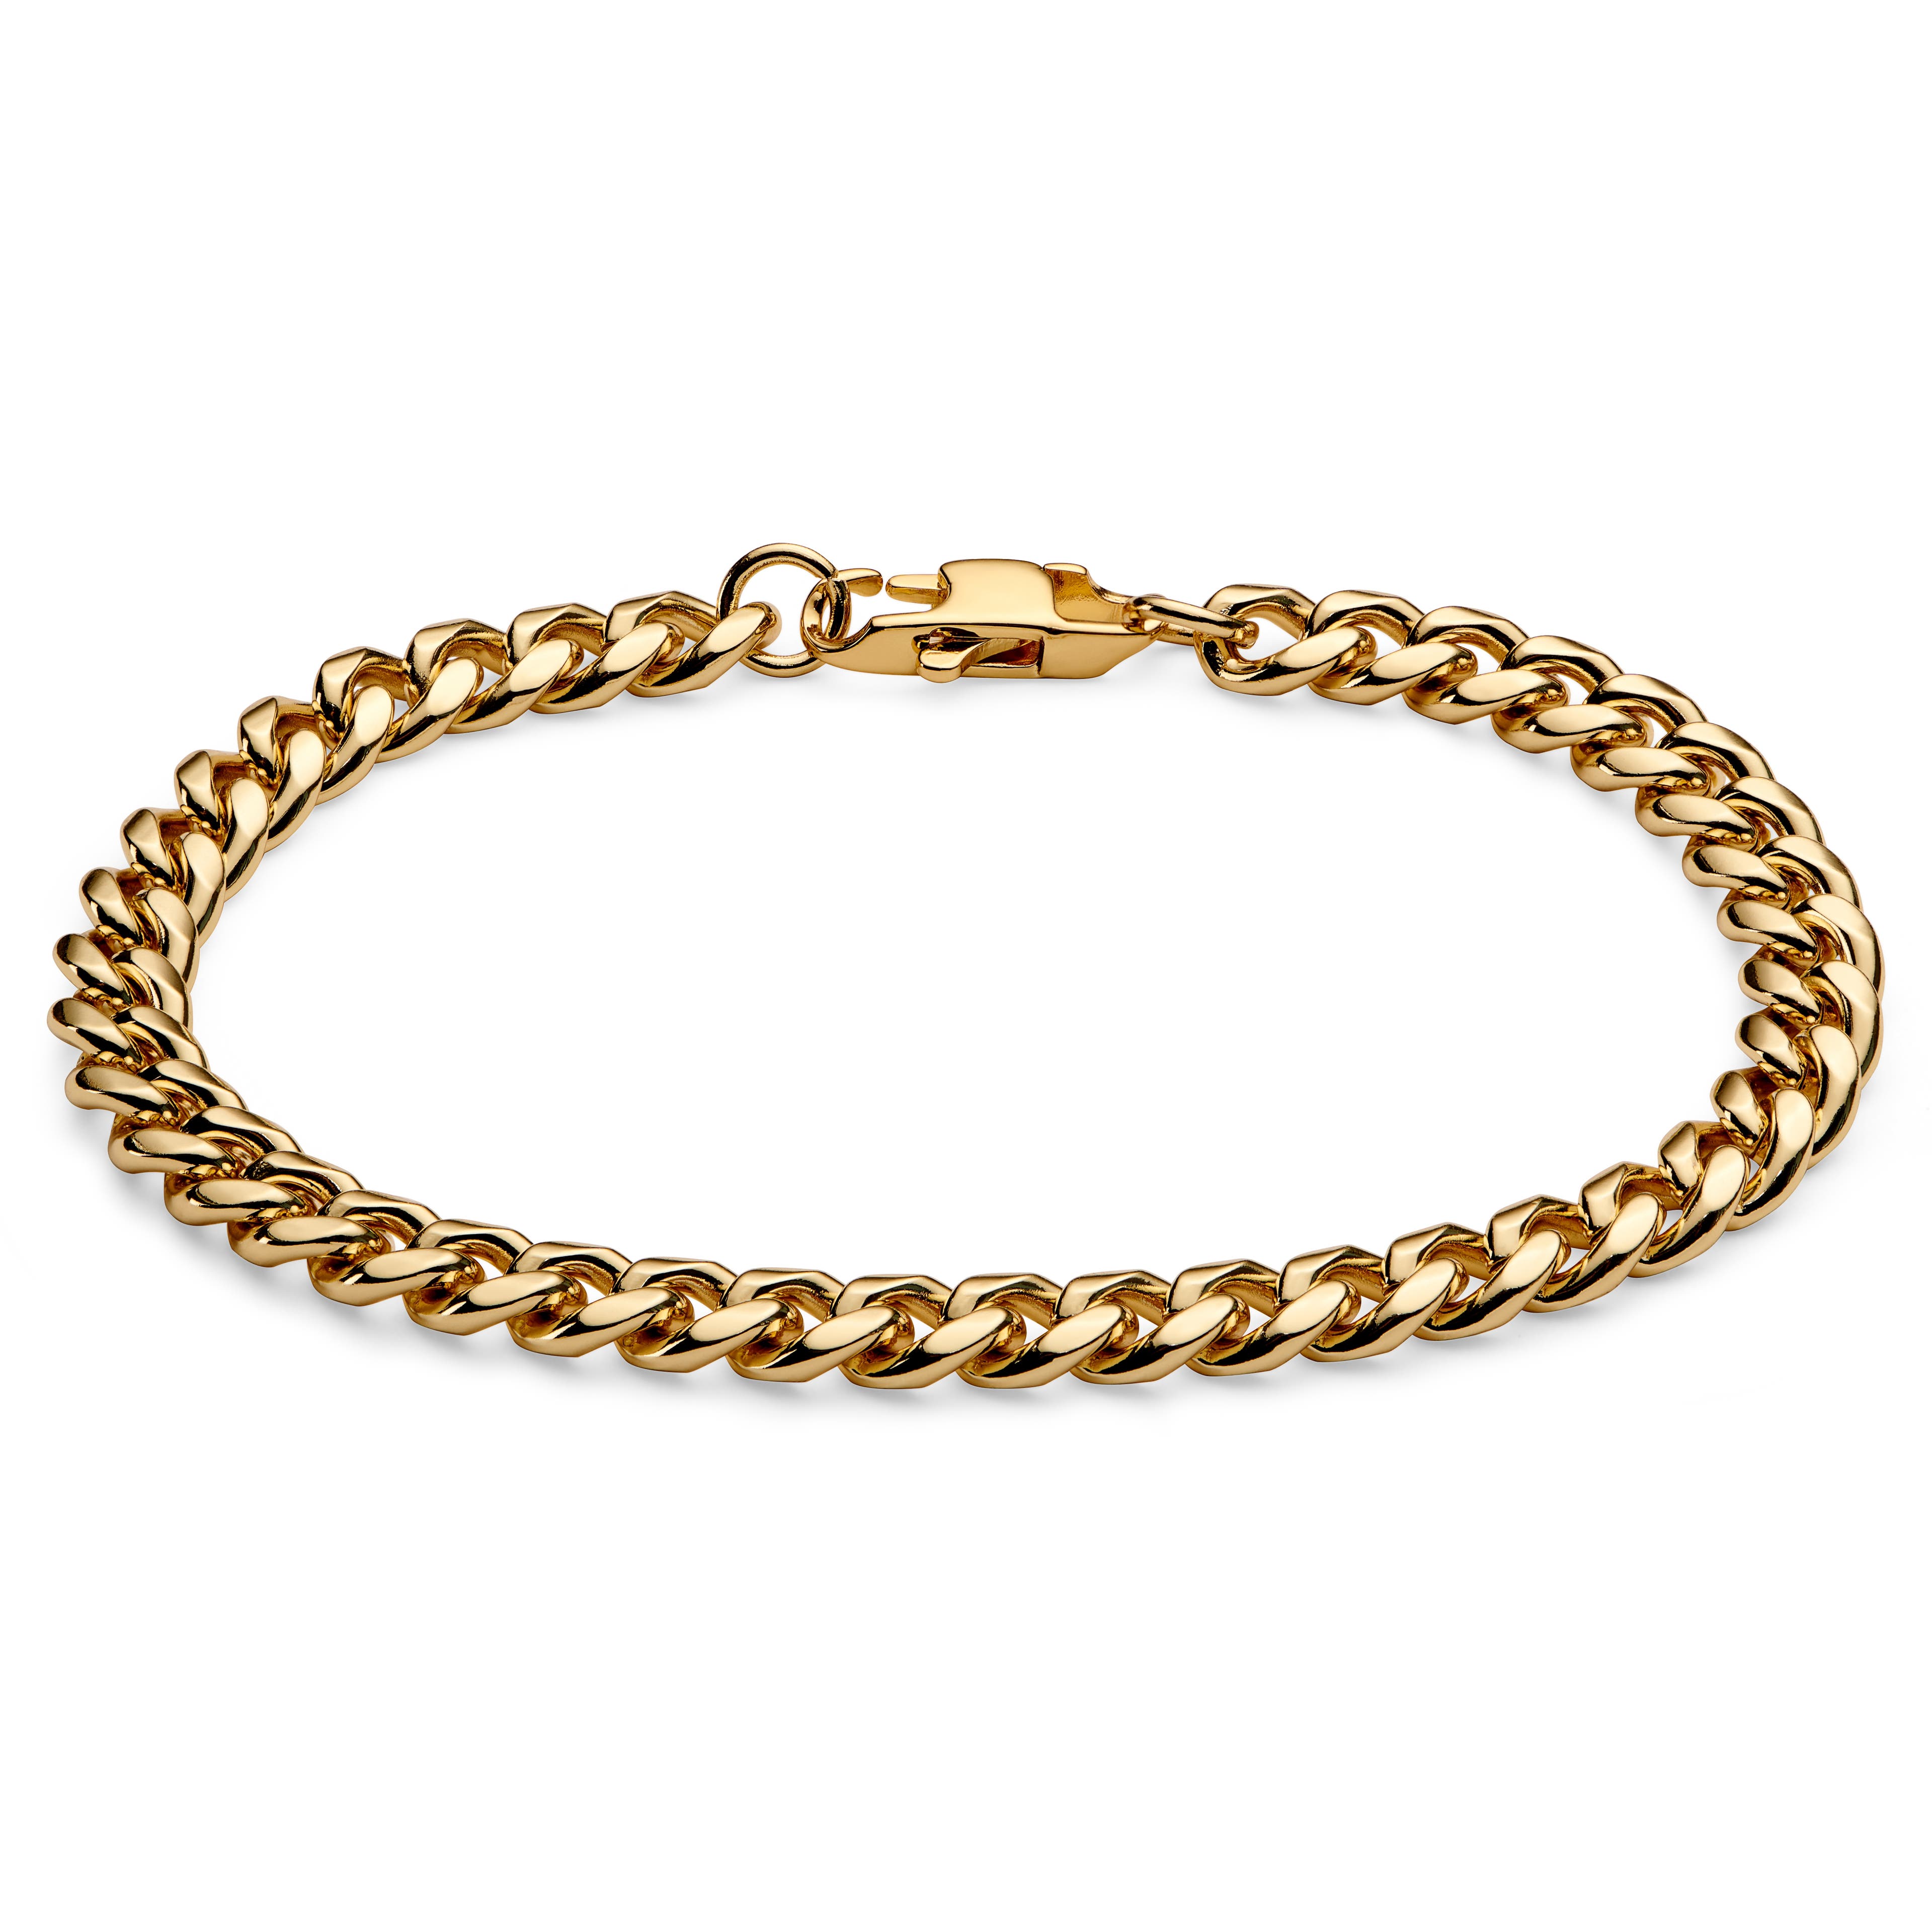 6 mm Gold-tone Chain Bracelet